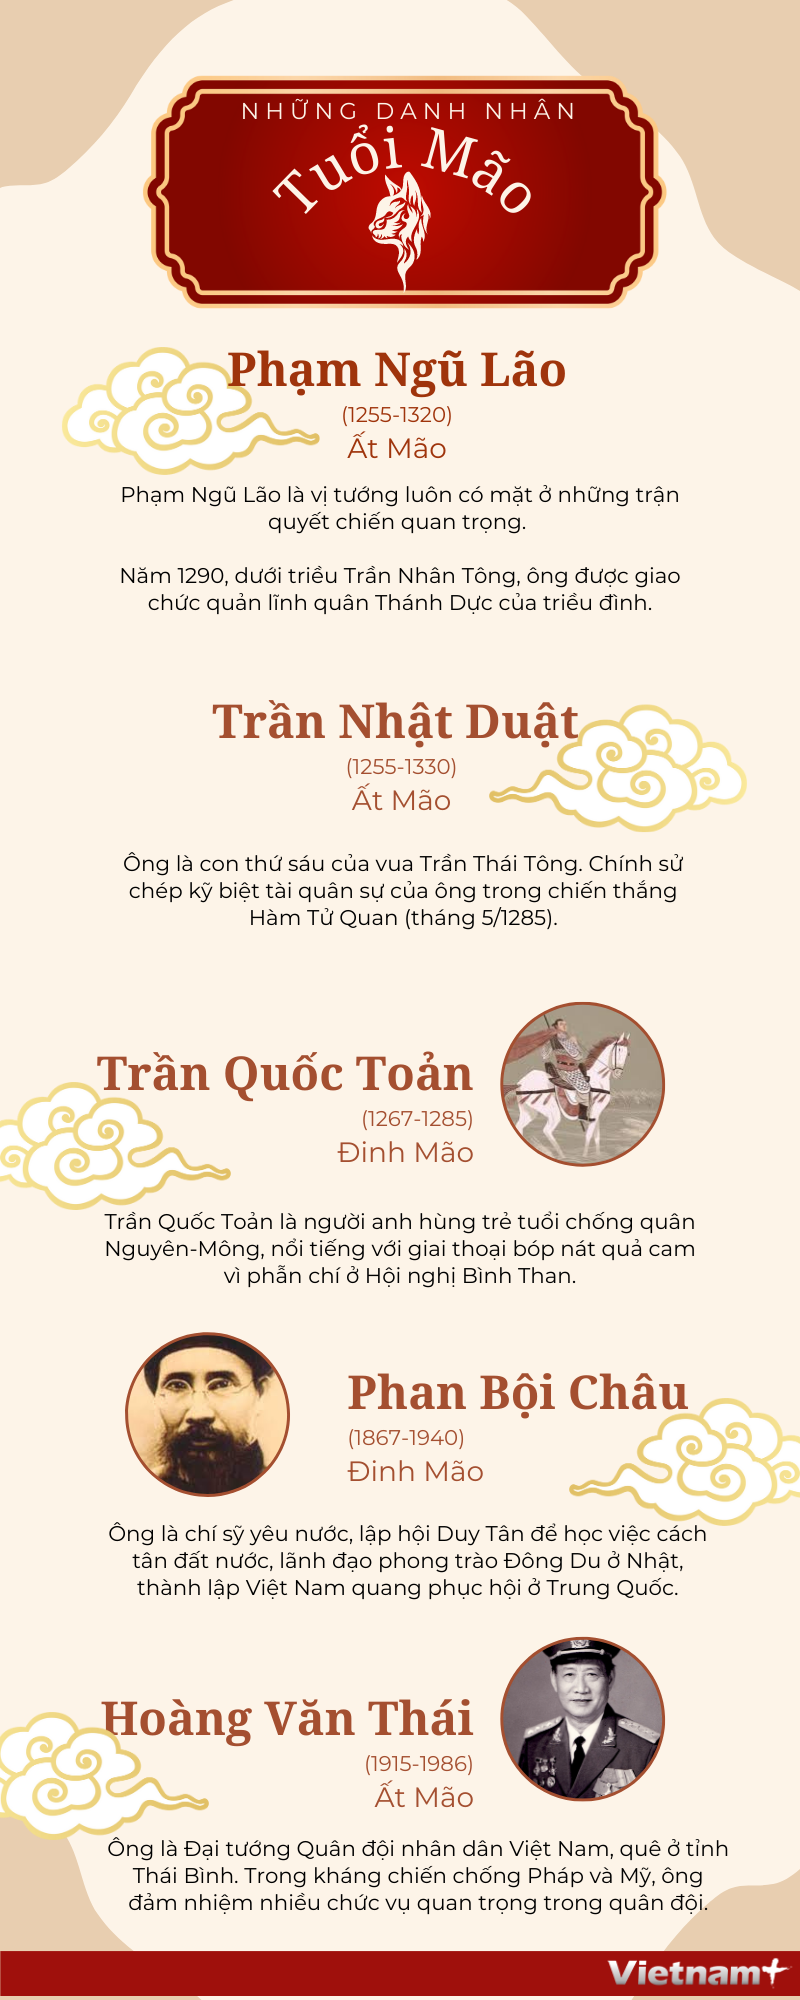 [Infographics] Nhung danh nhan Viet Nam sinh nam Mao hinh anh 1